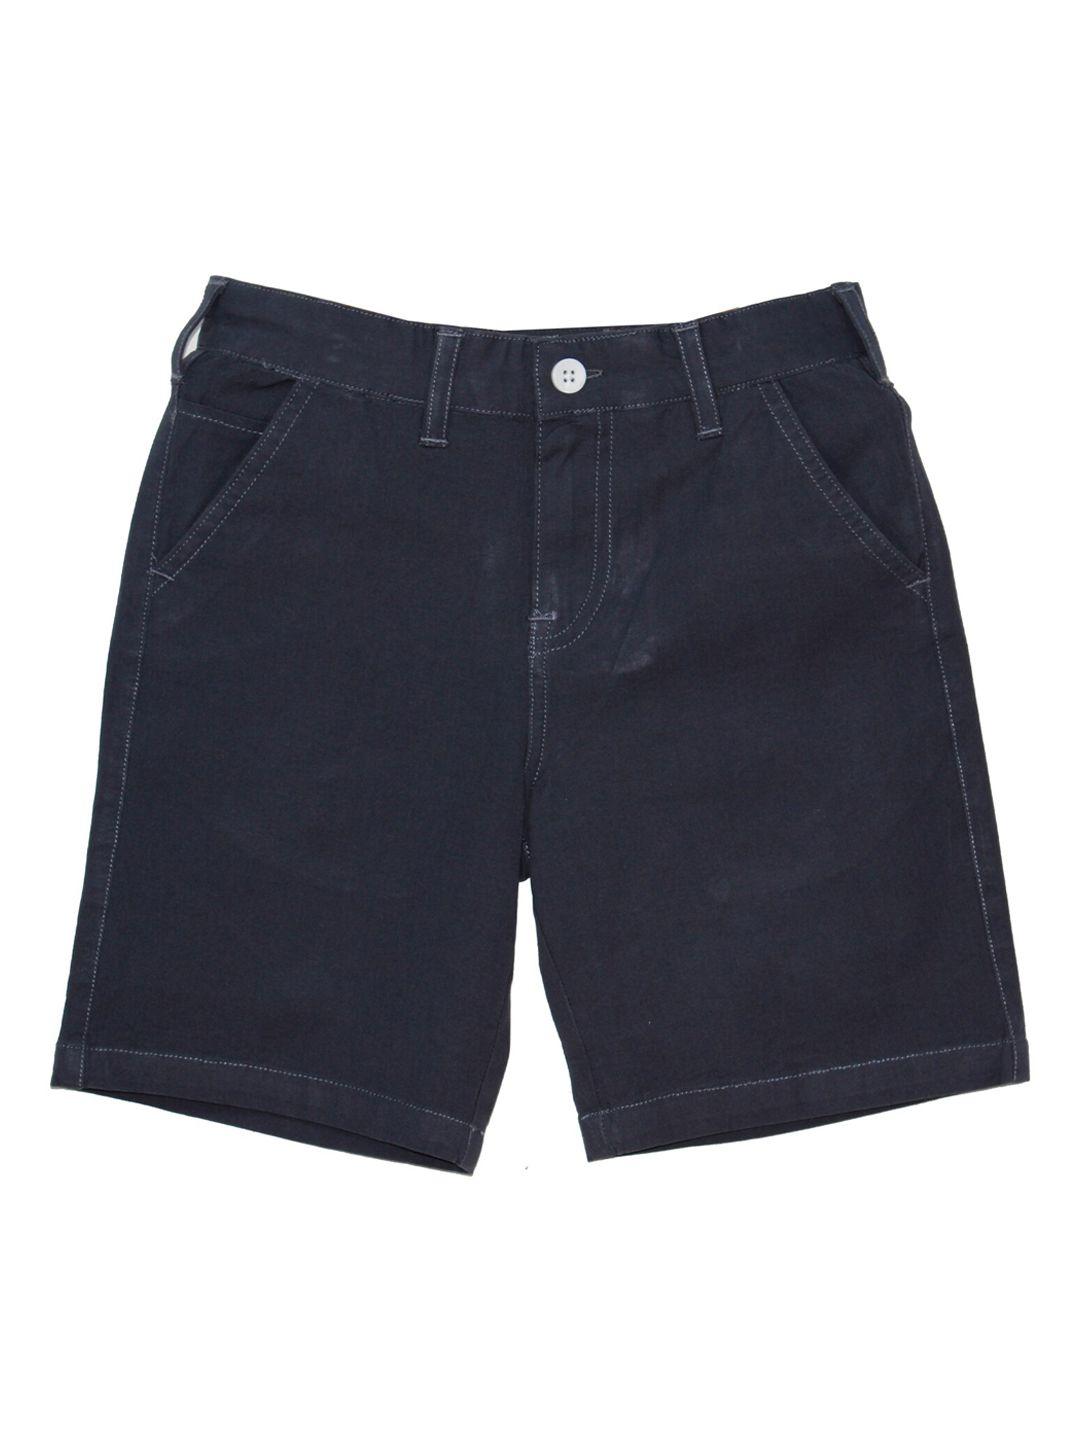 kiddopanti-boys-mid-rise-casual-shorts